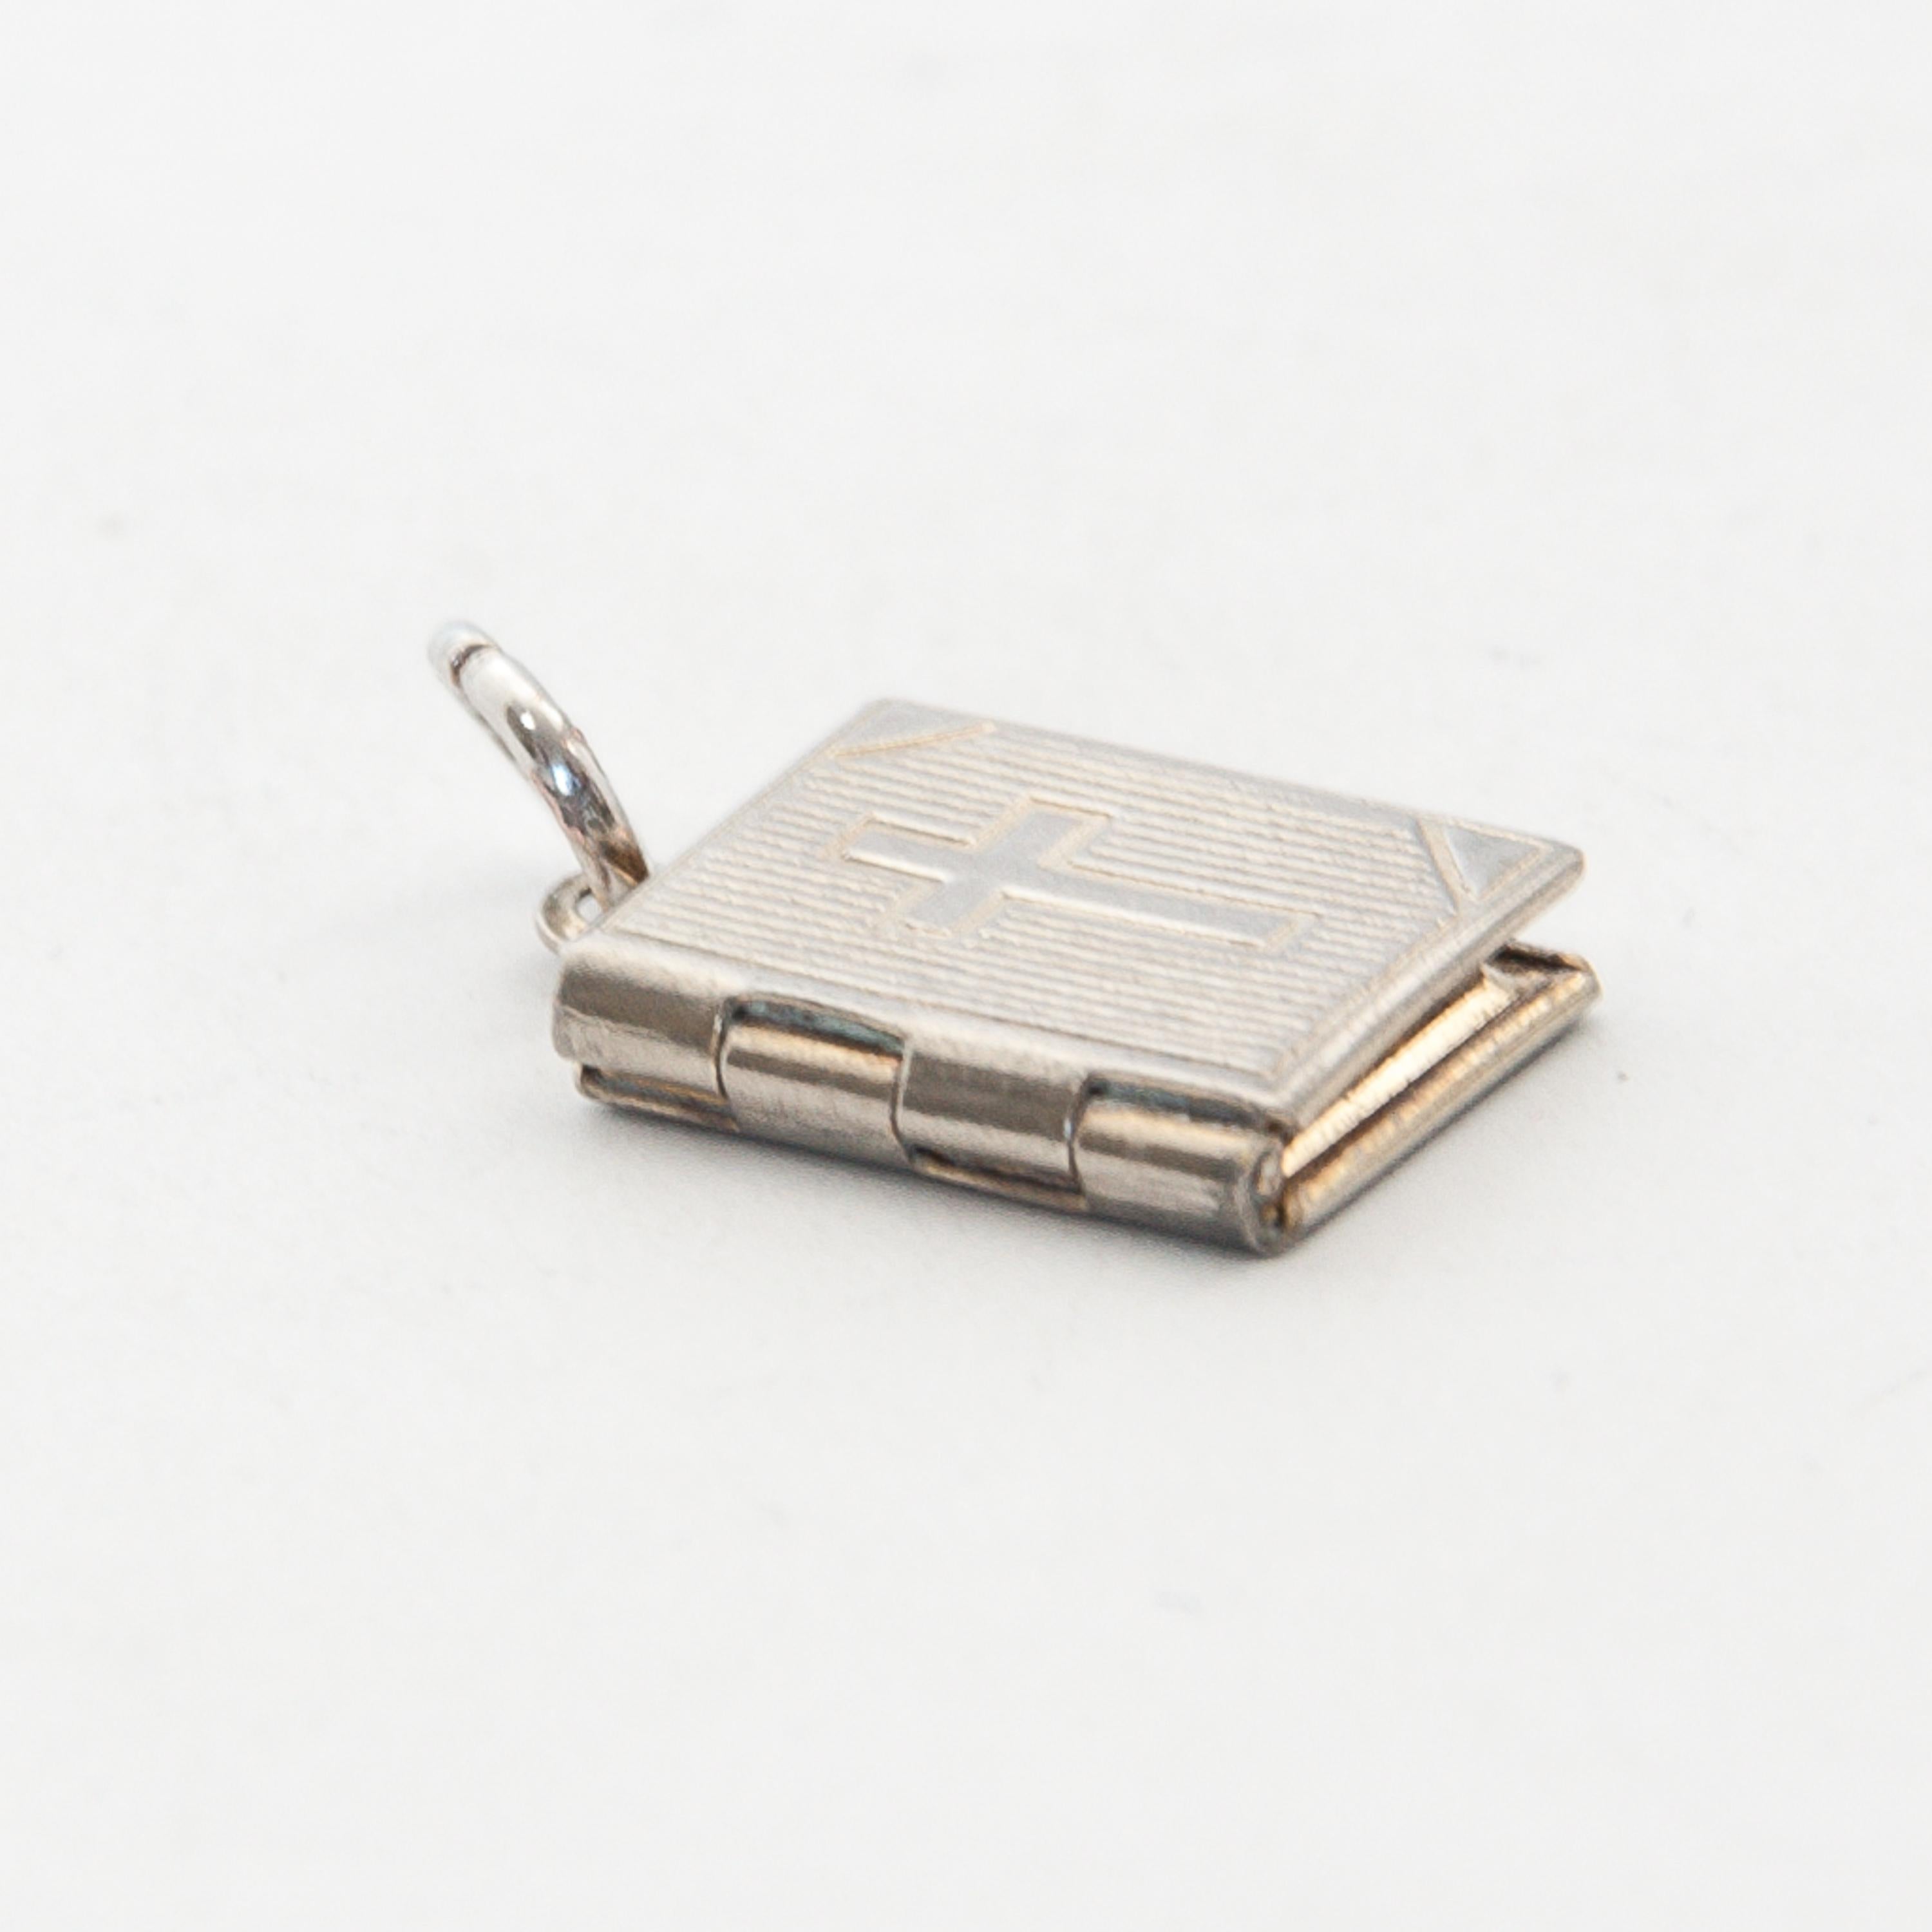 Vintage Religious Miniature Book Locket Charm Pendant 3